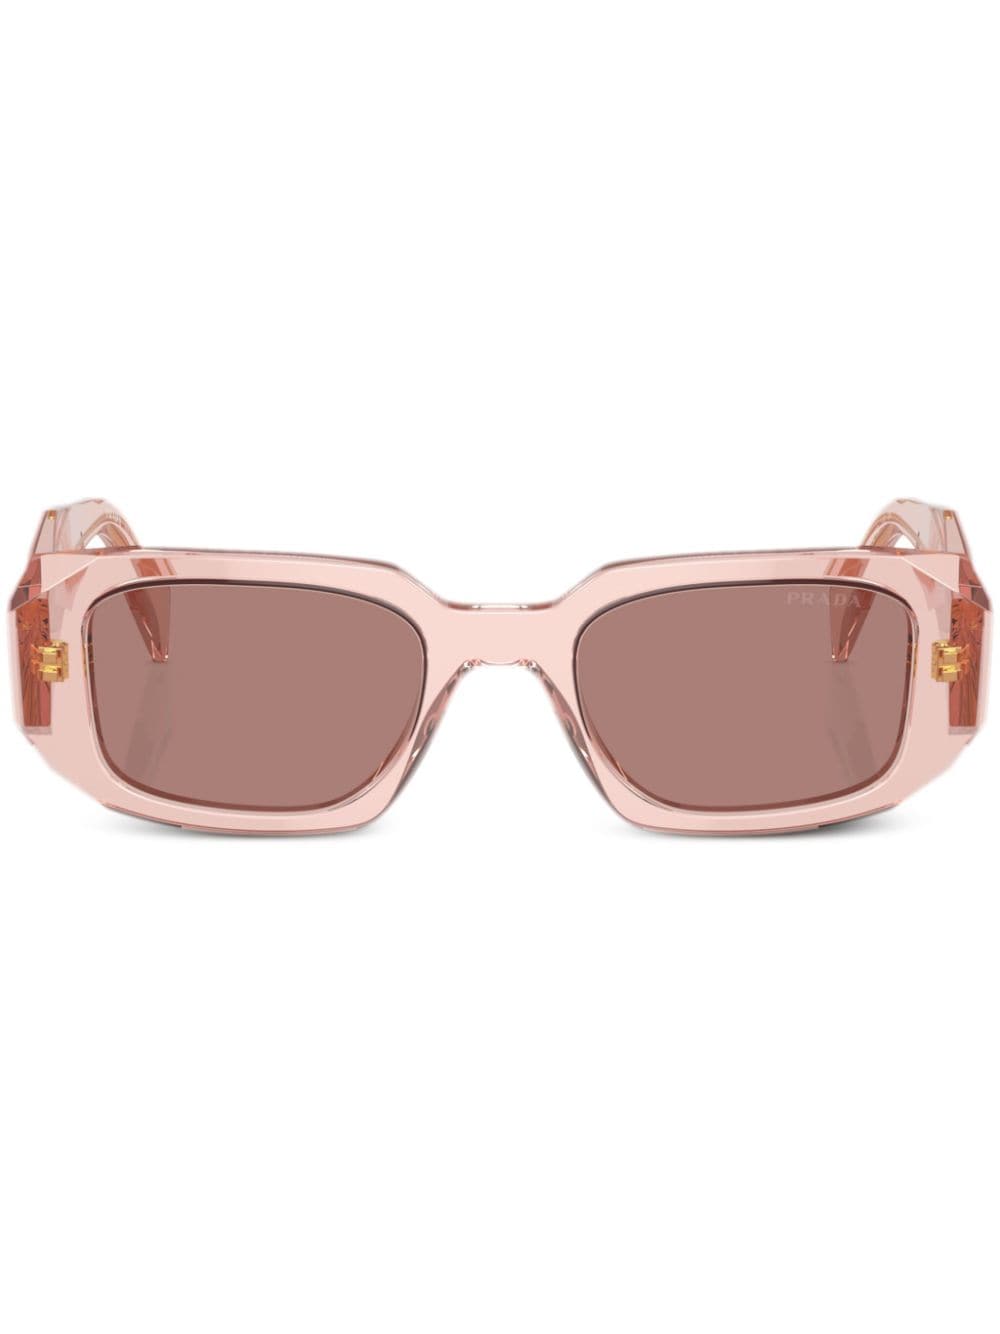 Prada Eyewear Prada PR 17WS oval frame sunglasses - Pink von Prada Eyewear